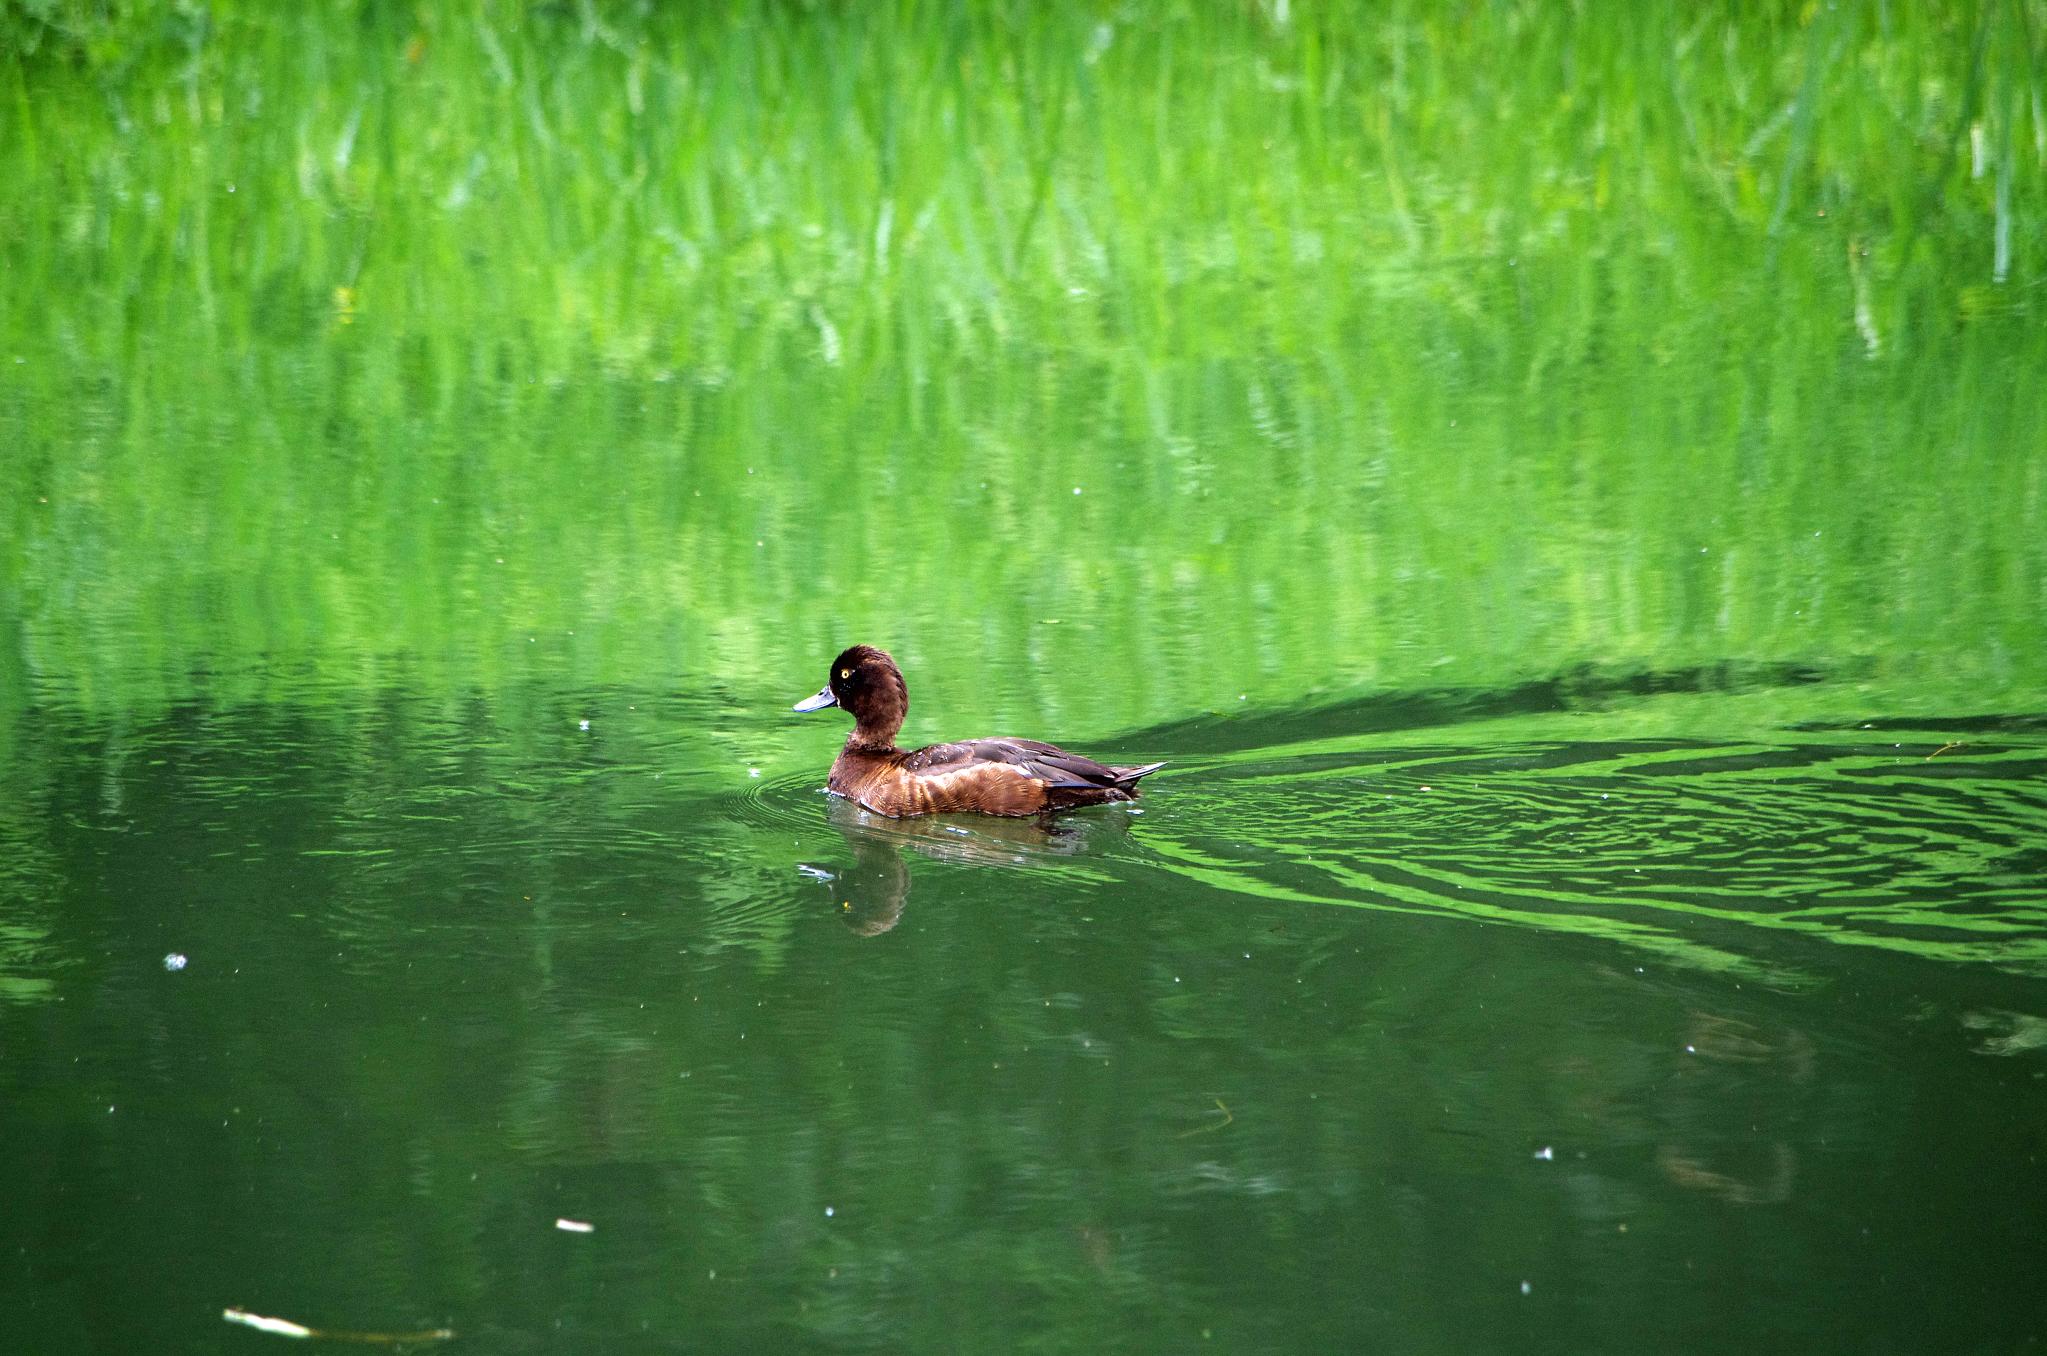 a duck floats in the water near green grass